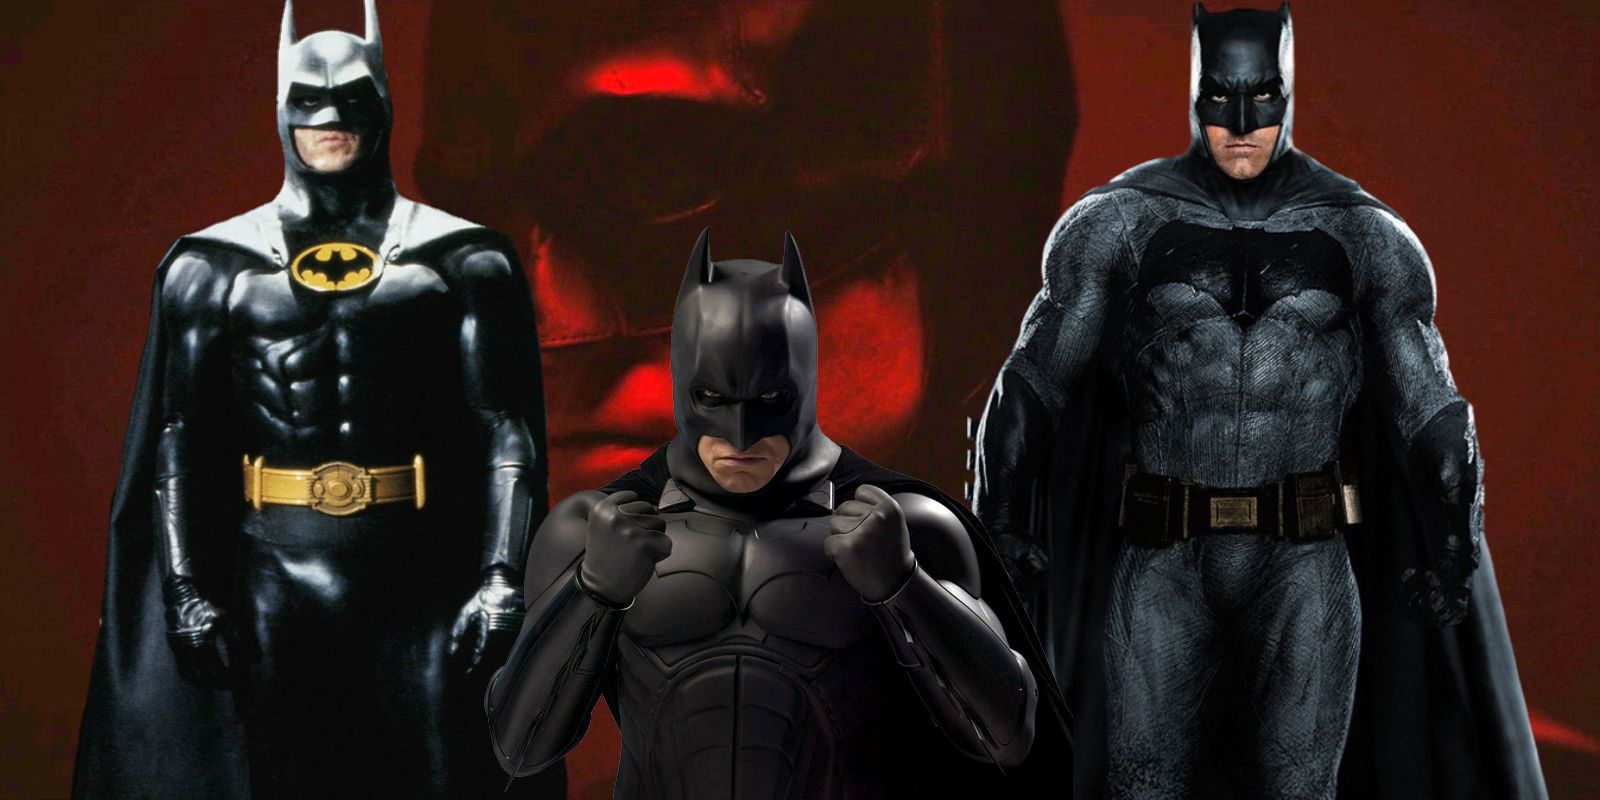 Michael Keaton in Batman, Ben Affleck in Batman v Superman, Robert Pattinson in The Batman and Christian Bale in Dark Knight